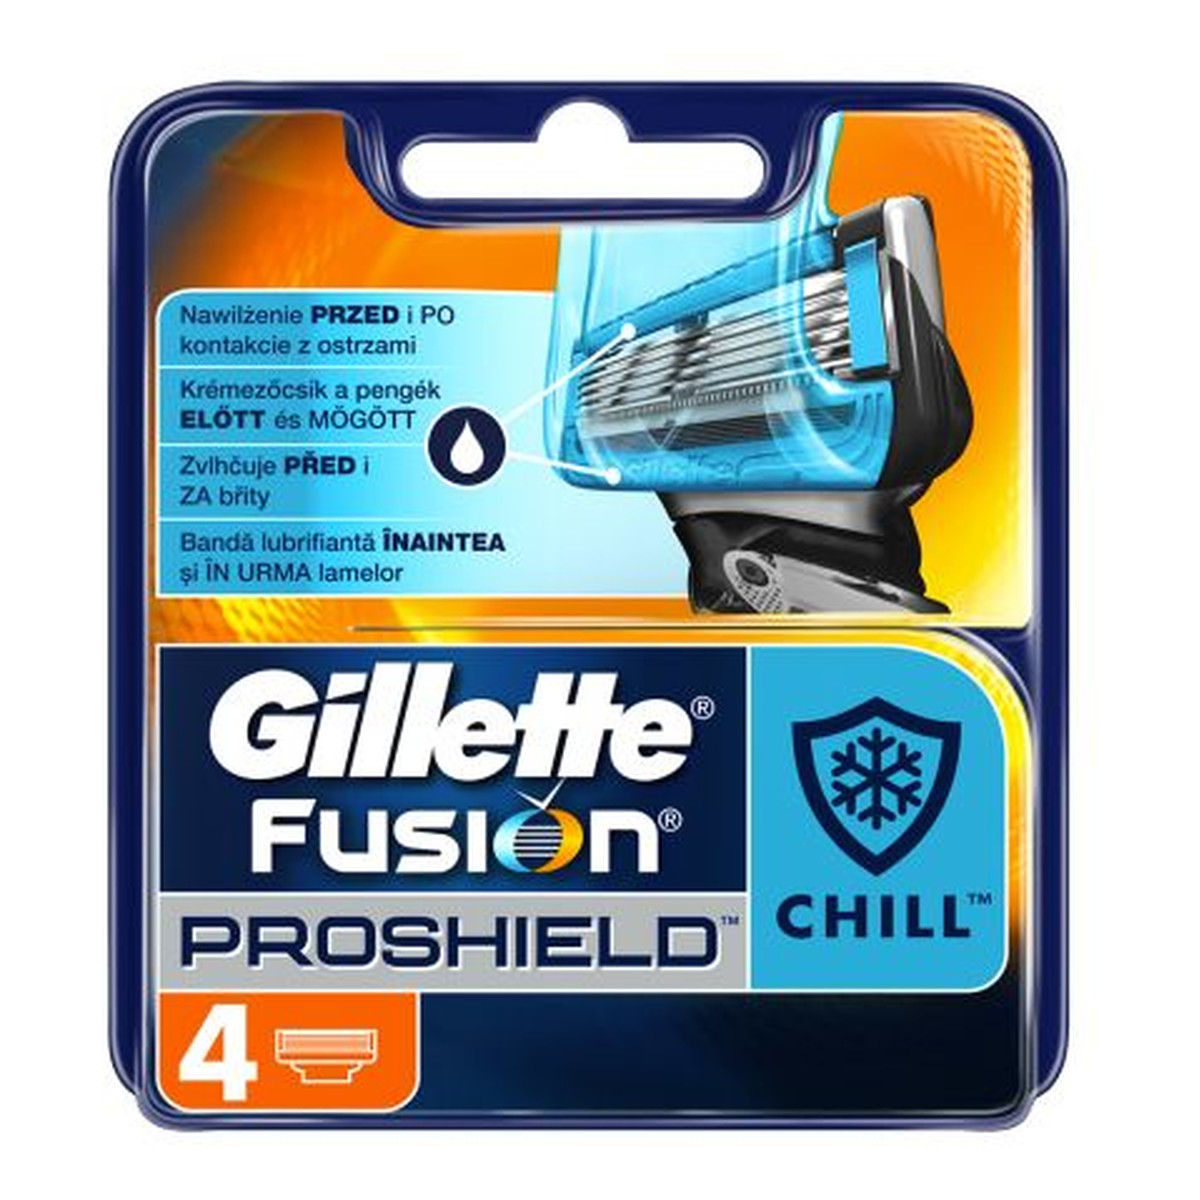 Gillette Fusion Proshield Chill zapasowe ostrza 4 szt.